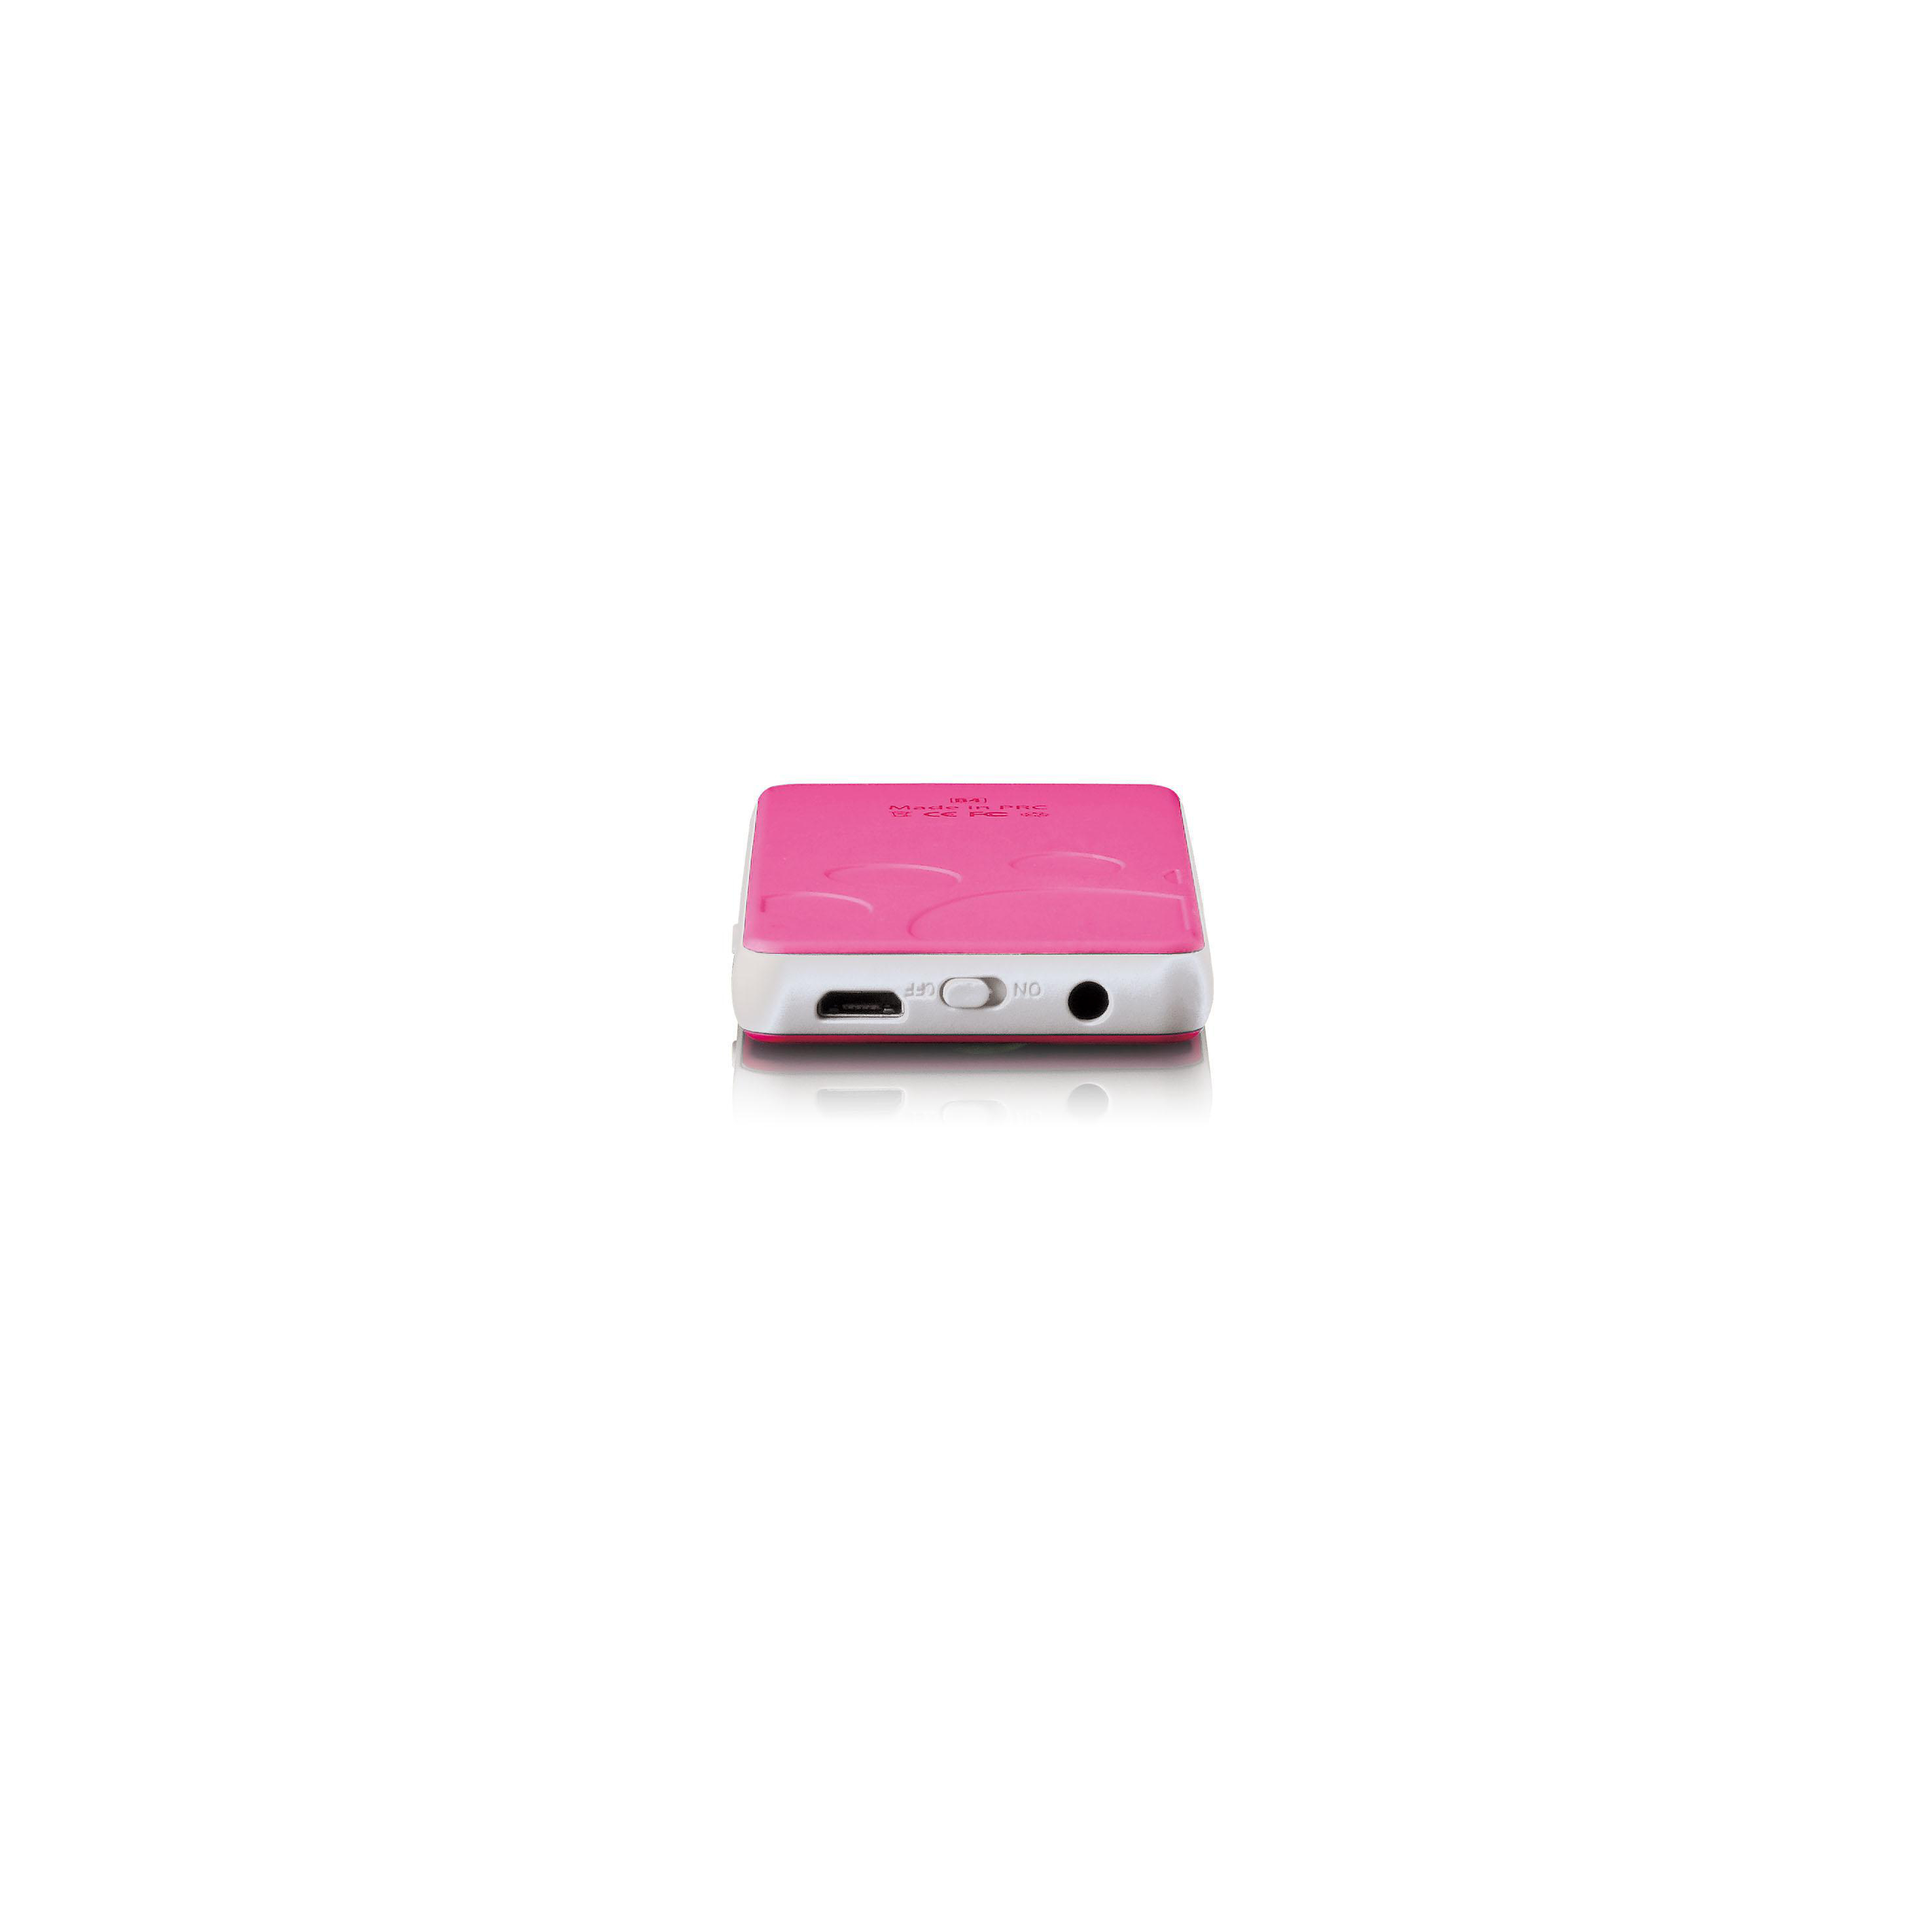 Xemio-560 LENCO Player GB, 8 Pink MP3